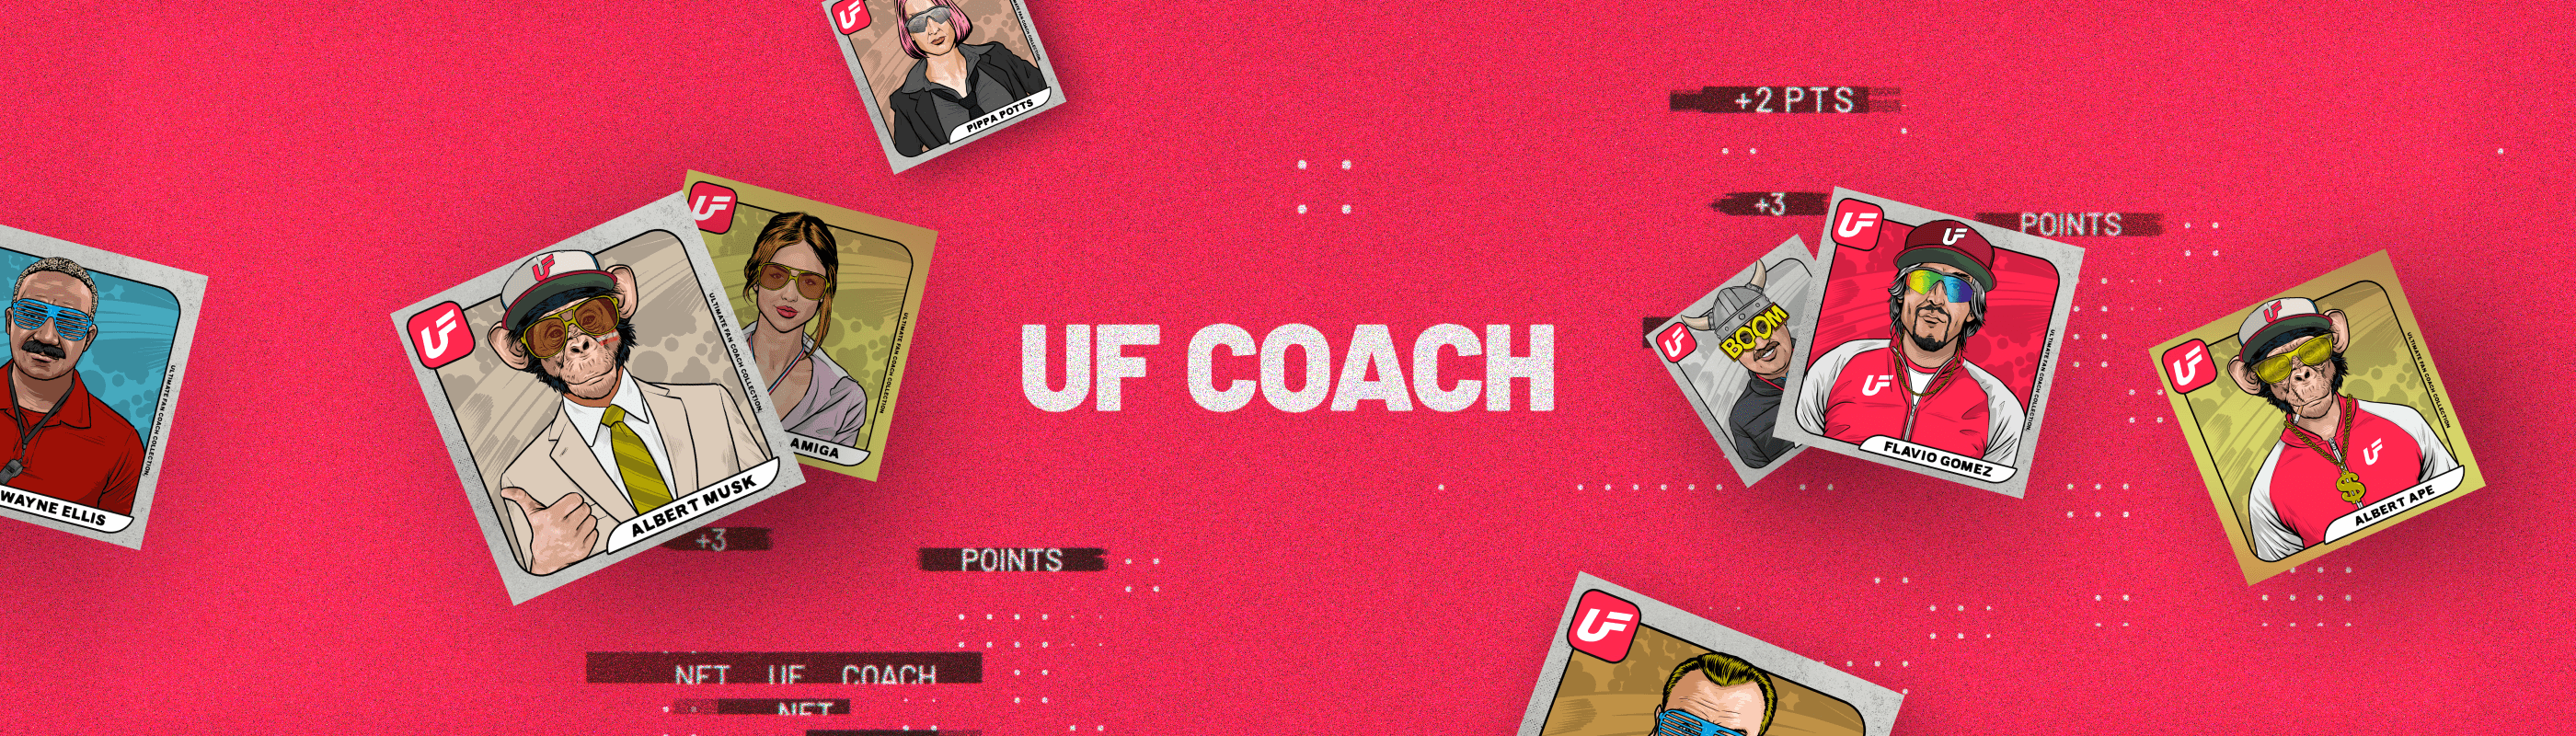 UF coach